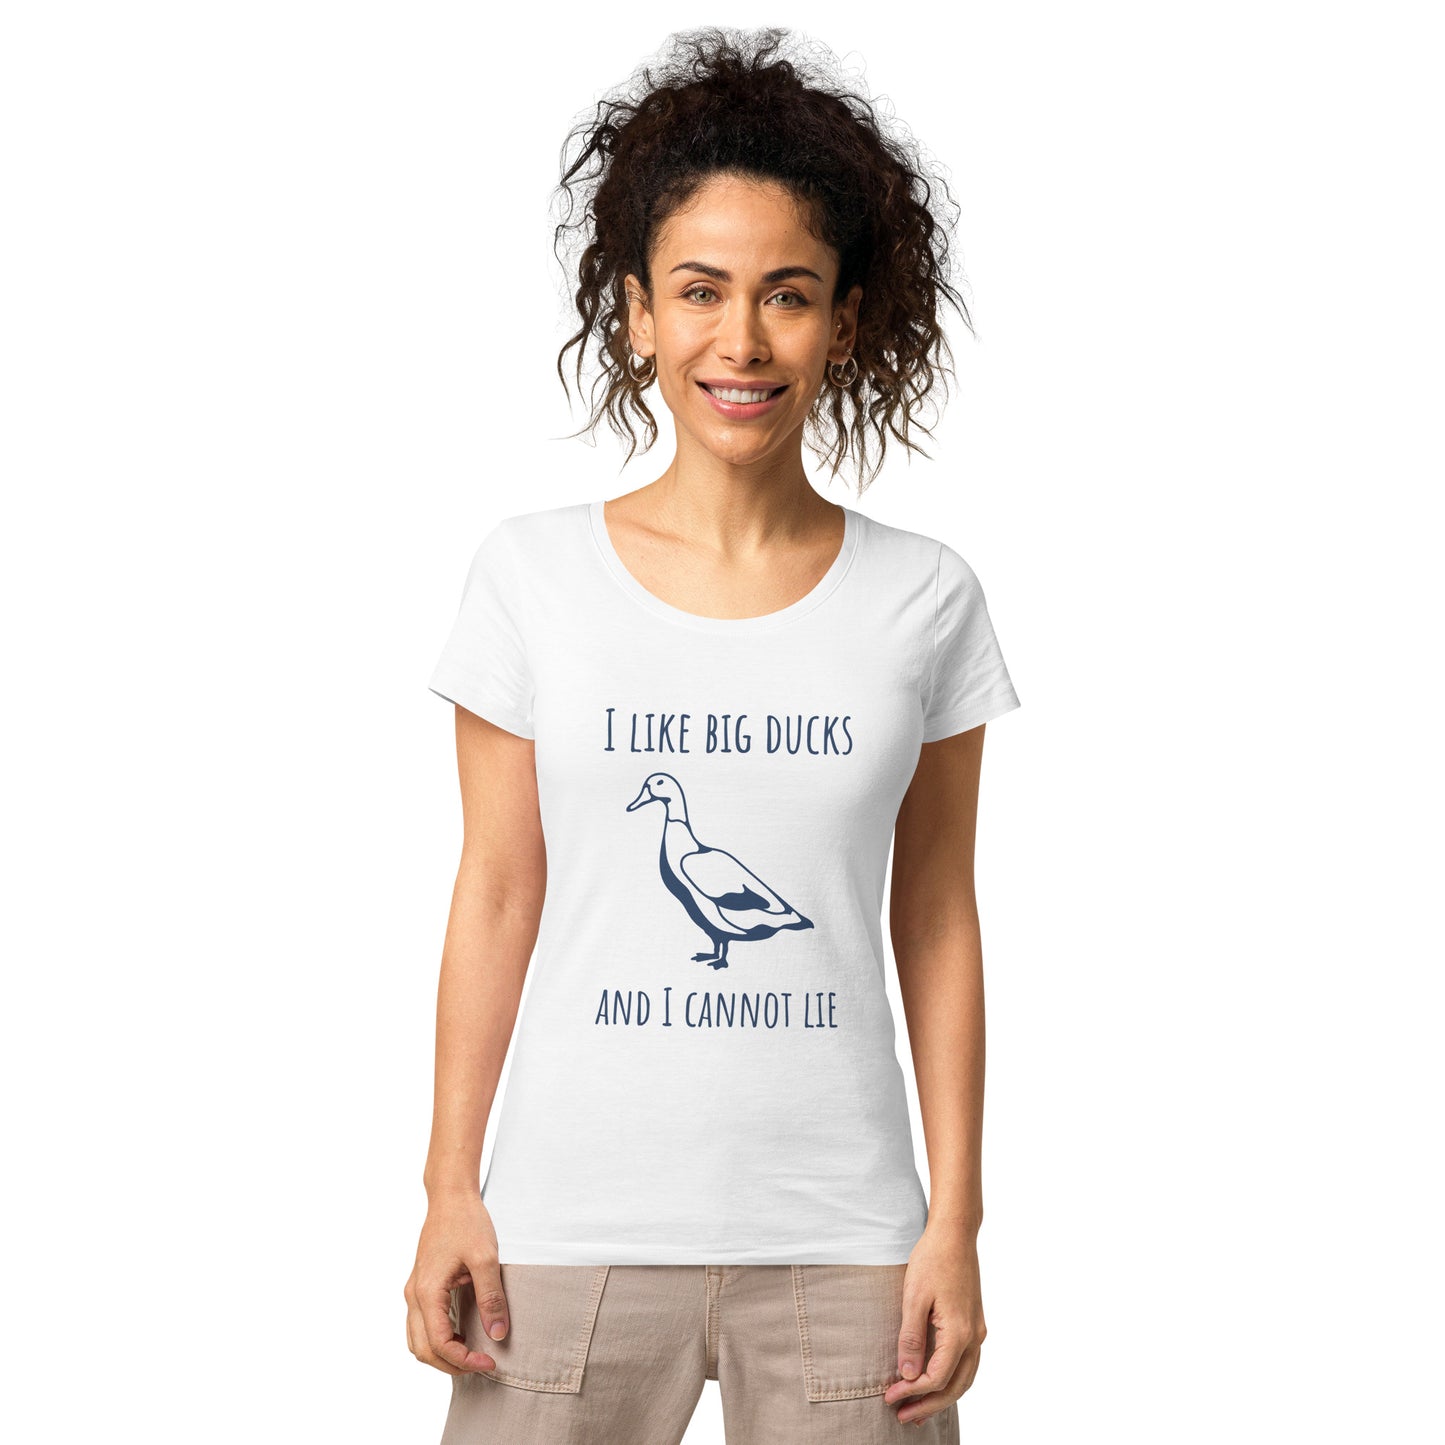 Laff - Big Ducks Women’s Basic Organic T-shirt